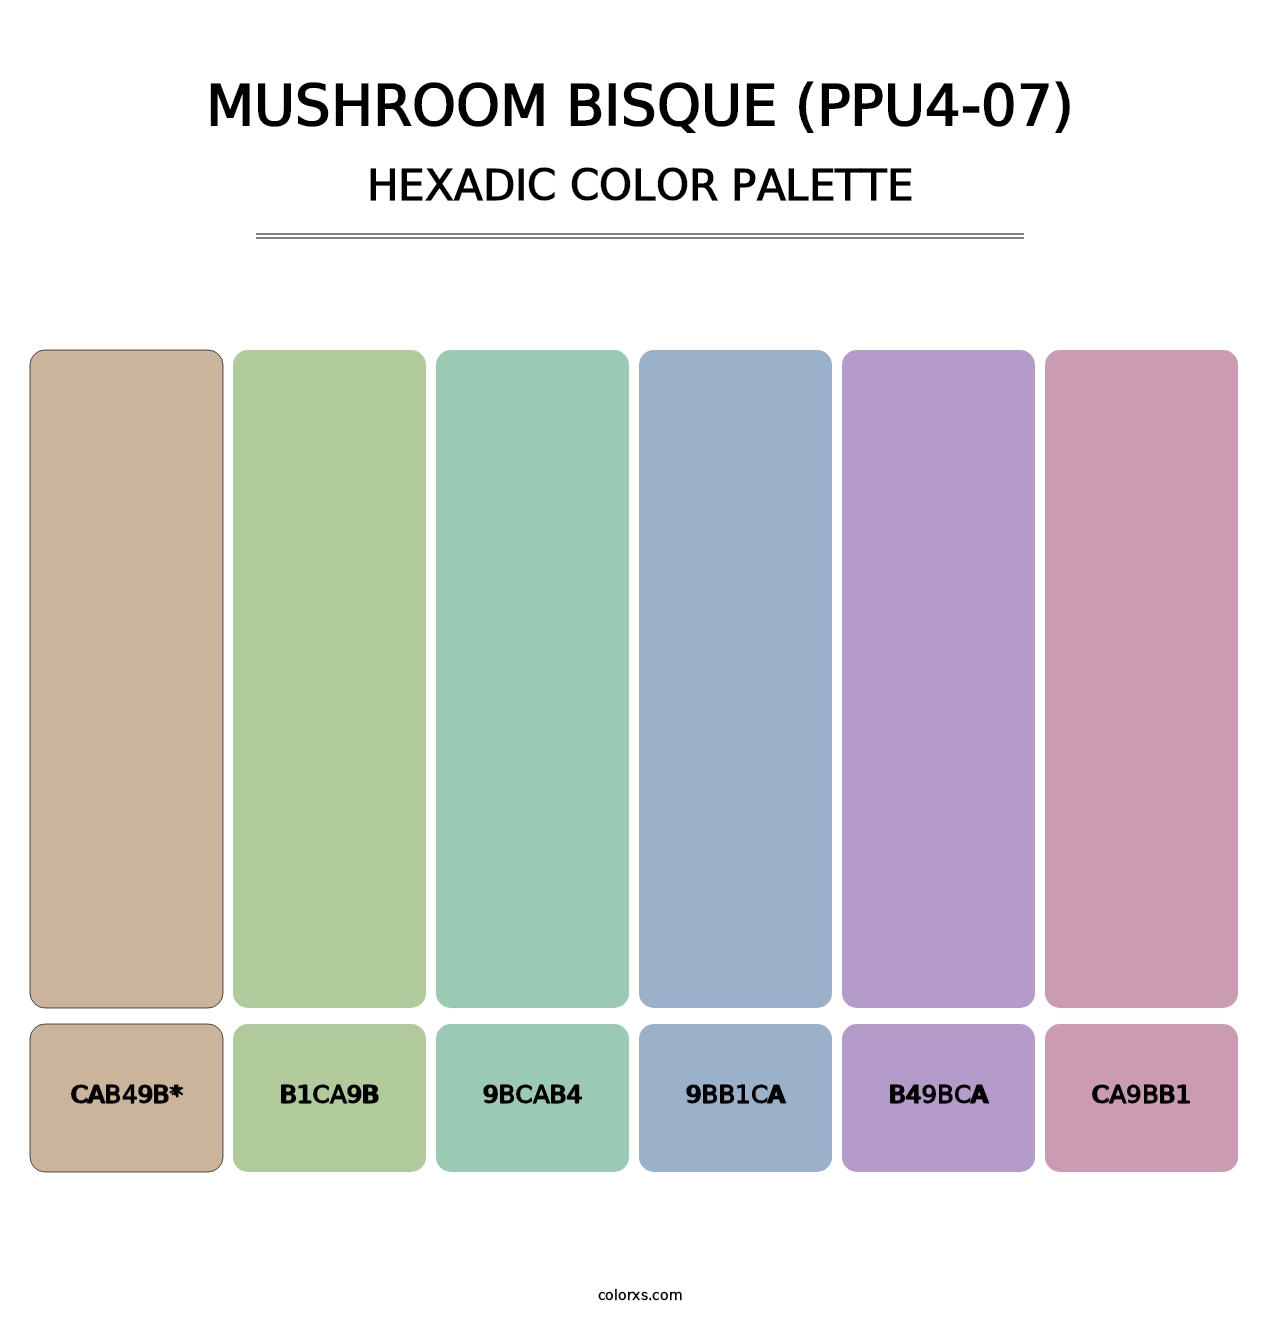 Mushroom Bisque (PPU4-07) - Hexadic Color Palette